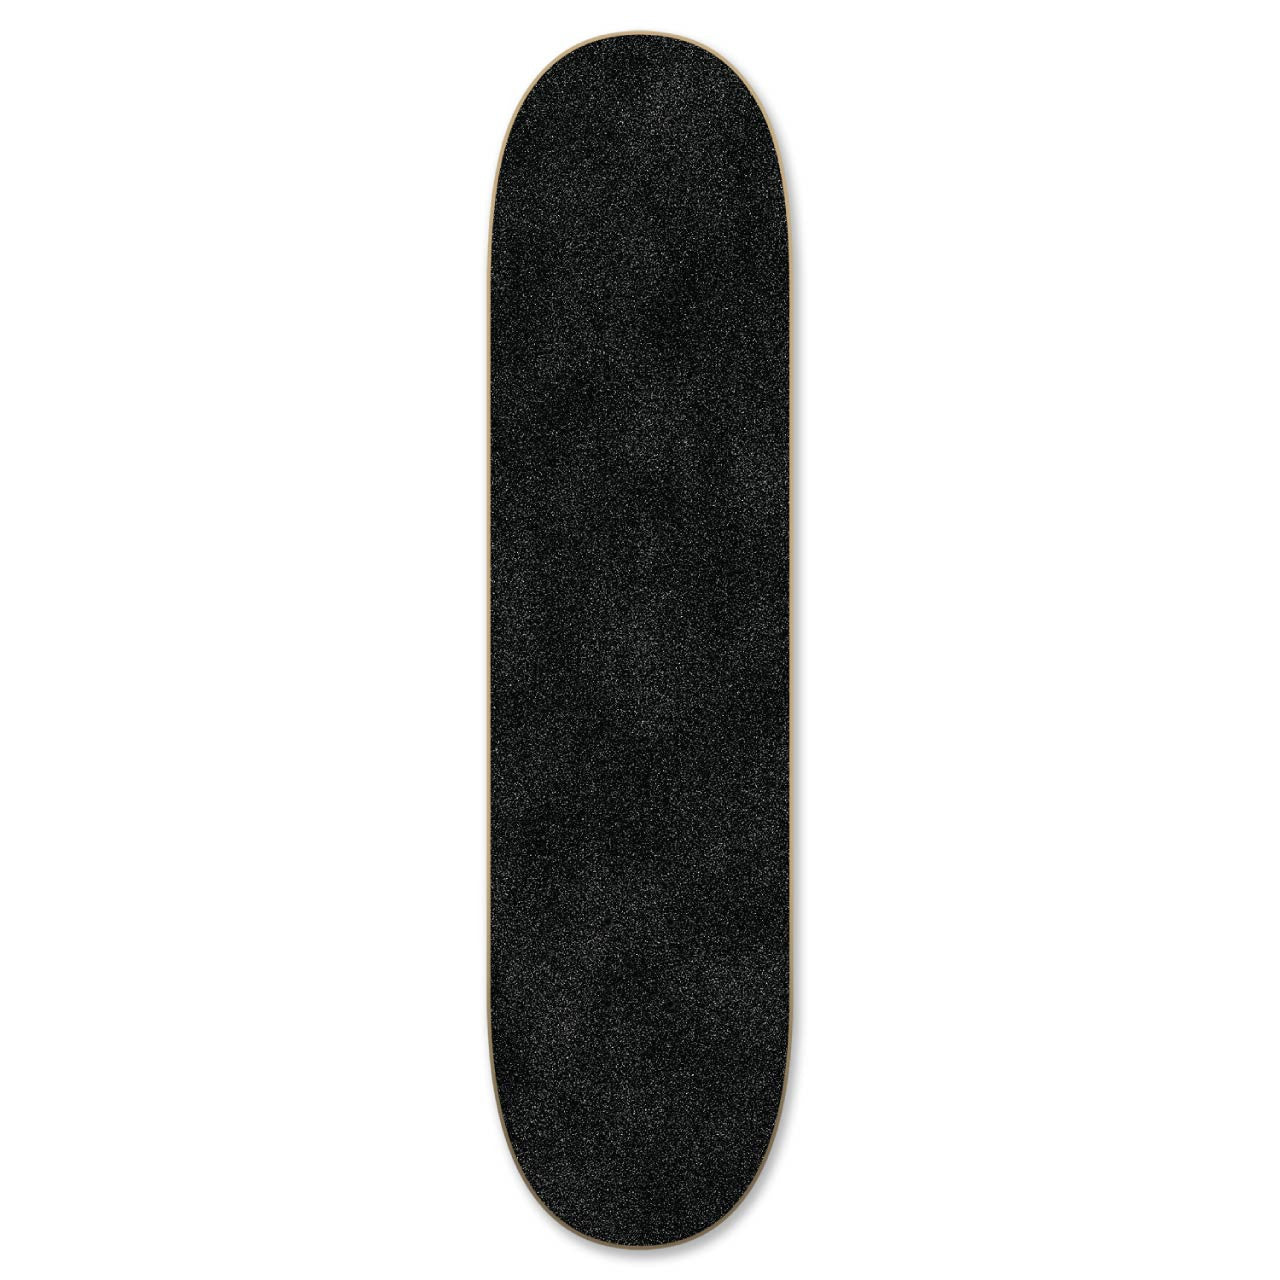 Graphic Hot Rod Ragz Skateboard Deck